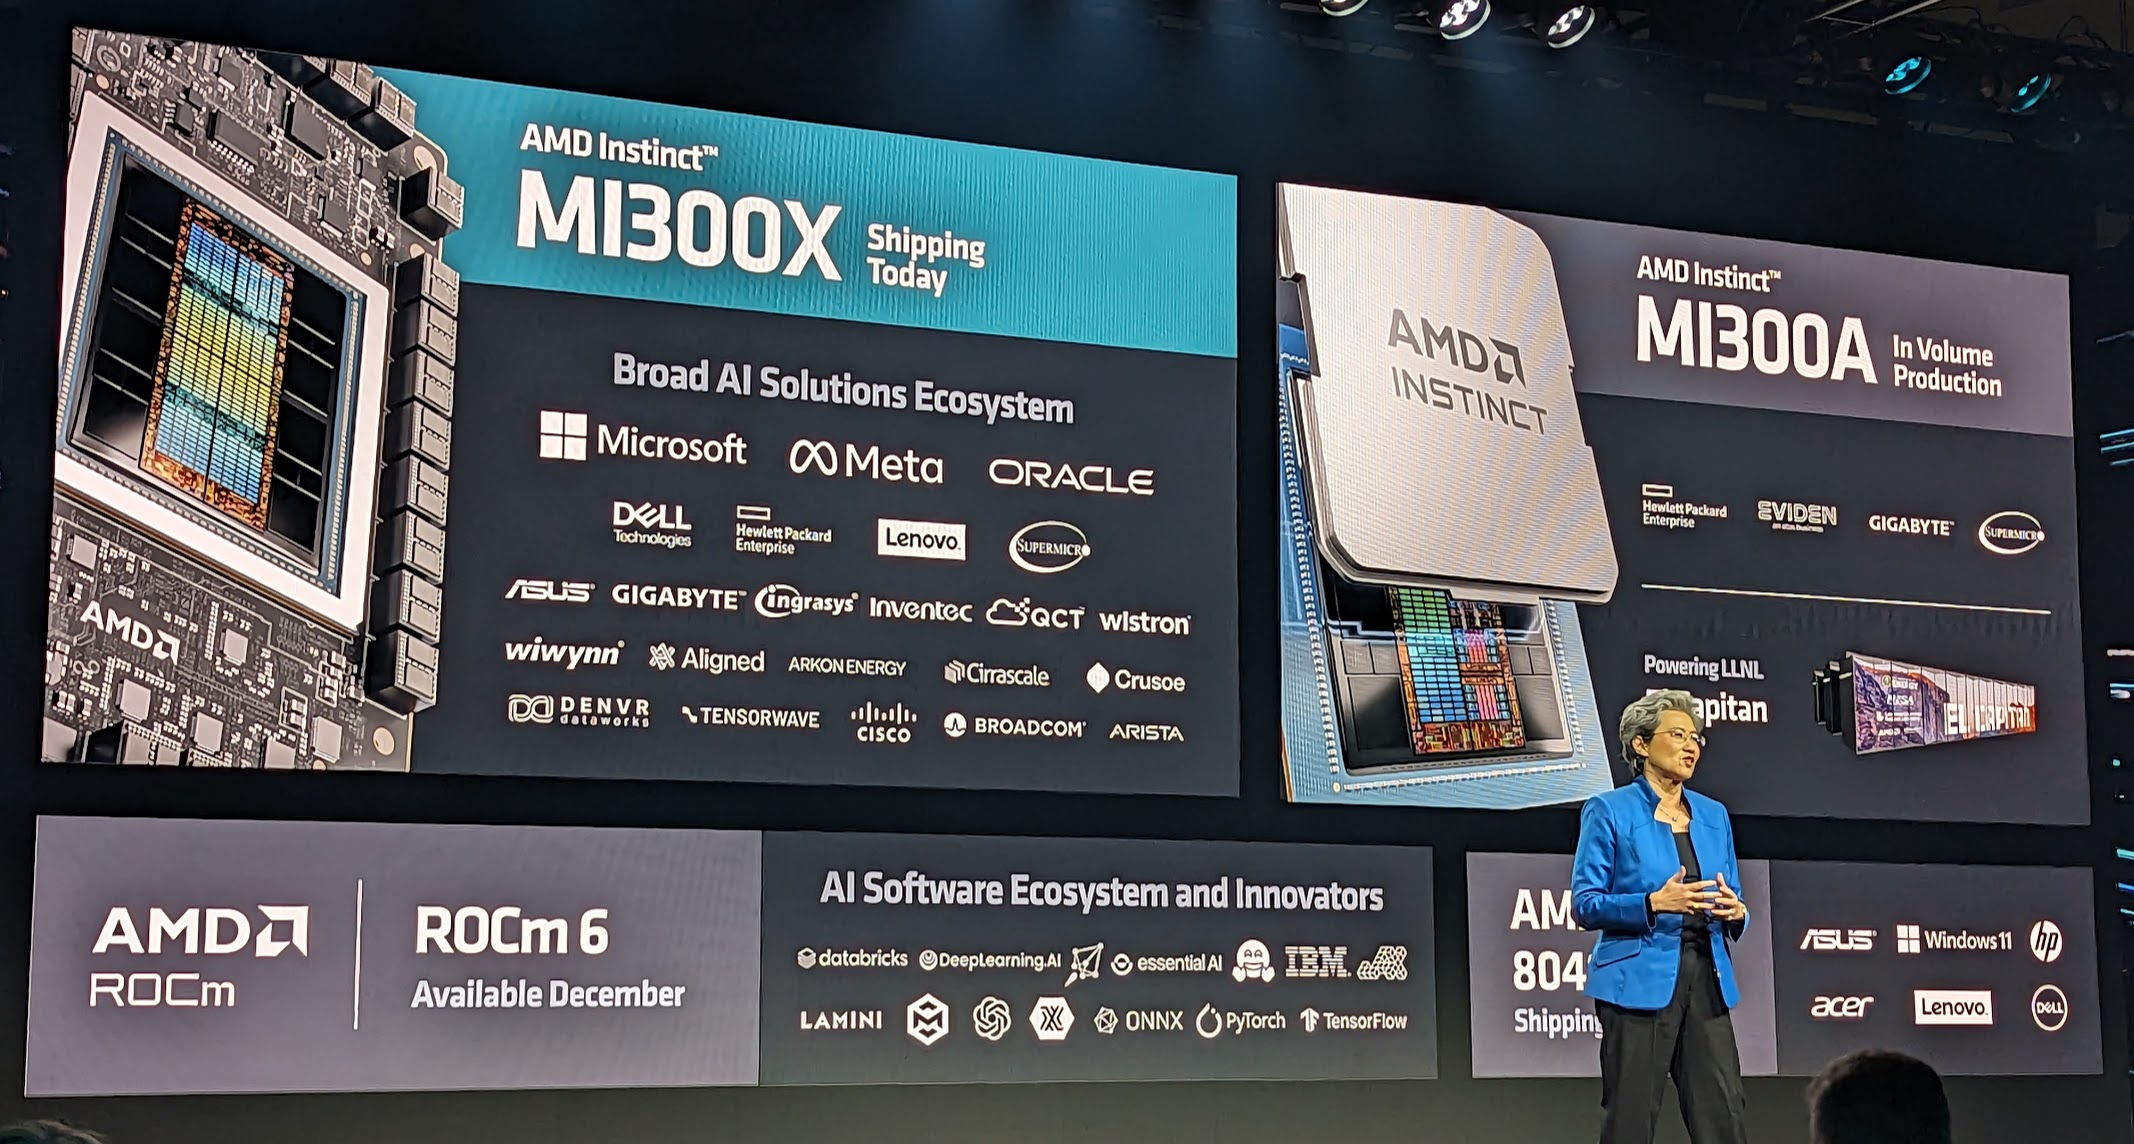 AMD-MI300-Event-Wrap-Up-Slide.jpeg